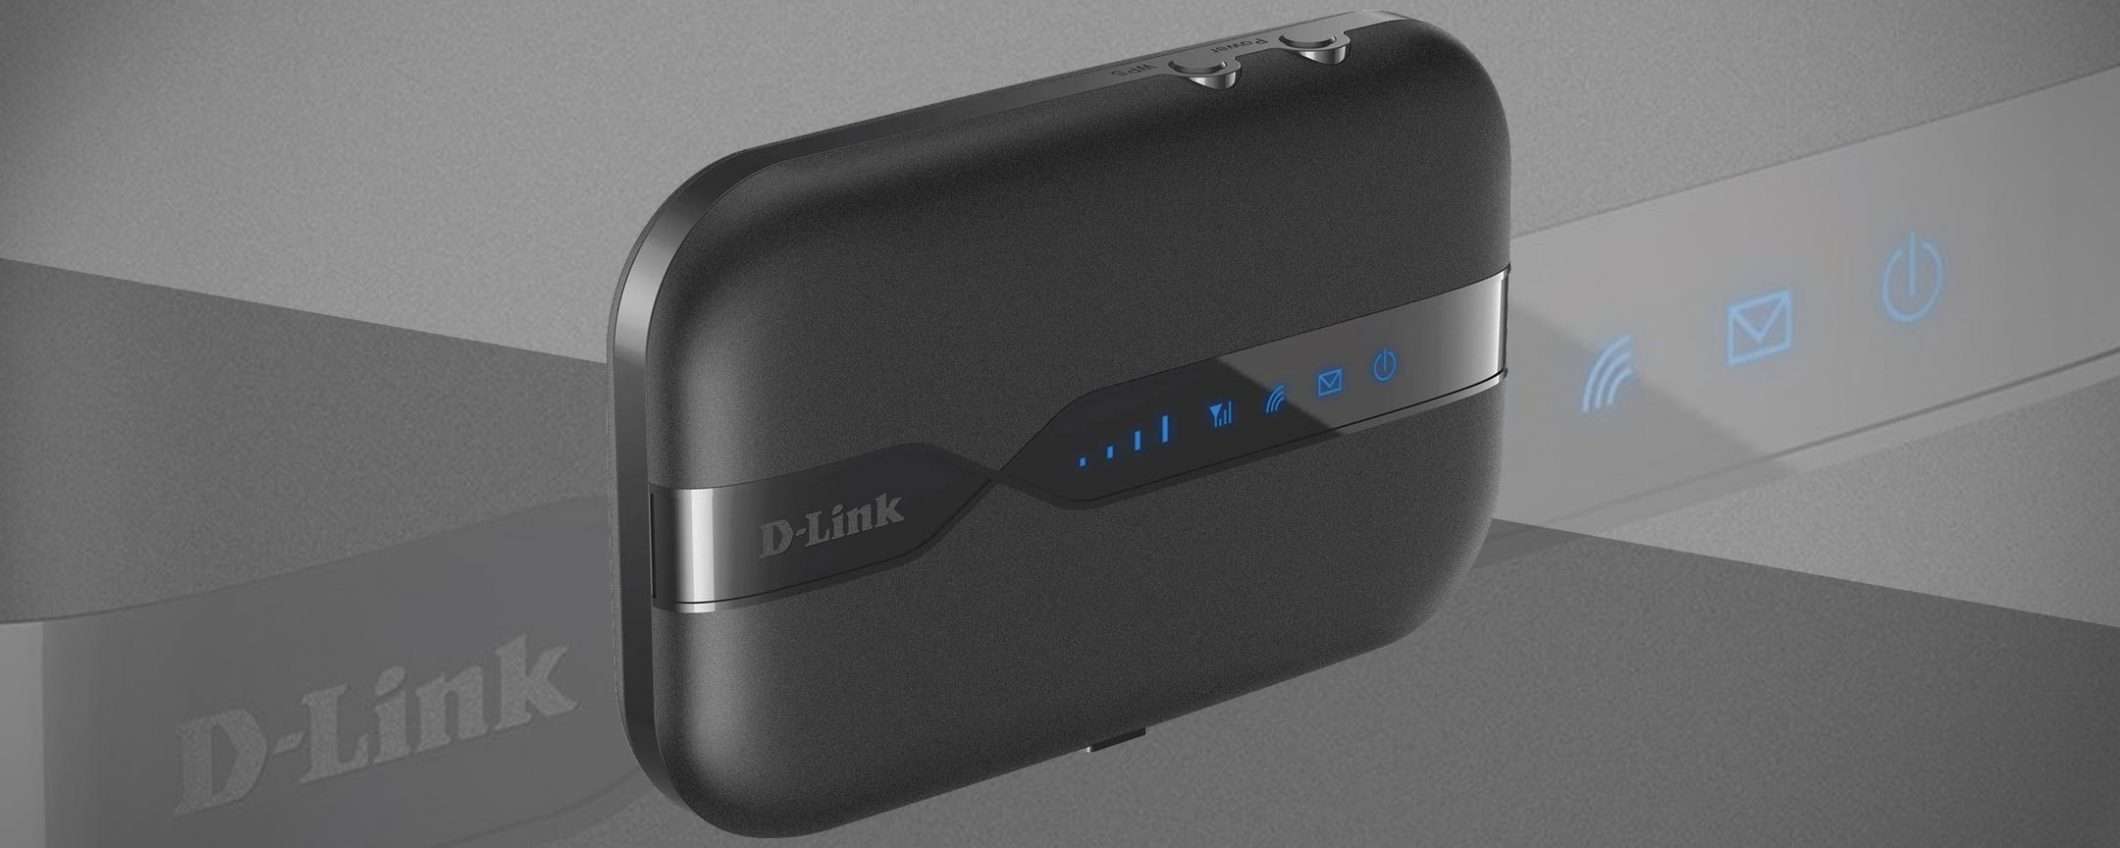 Hotspot portatile D-Link in offerta su Amazon